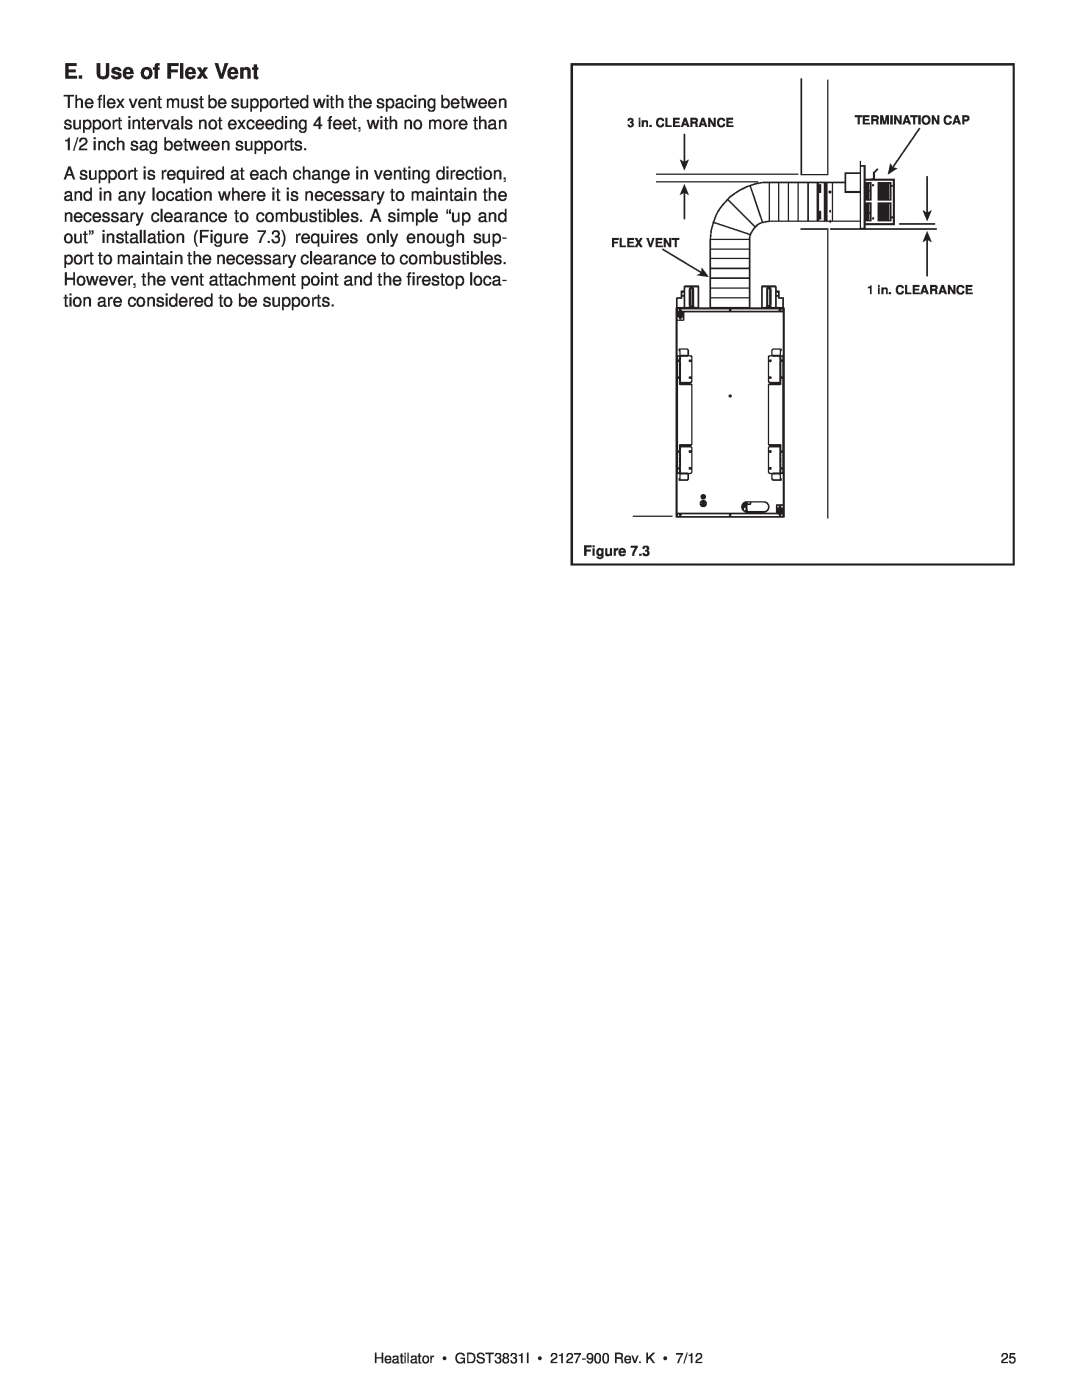 Heatiator owner manual E. Use of Flex Vent, Heatilator GDST3831I 2127-900Rev. K 7/12 